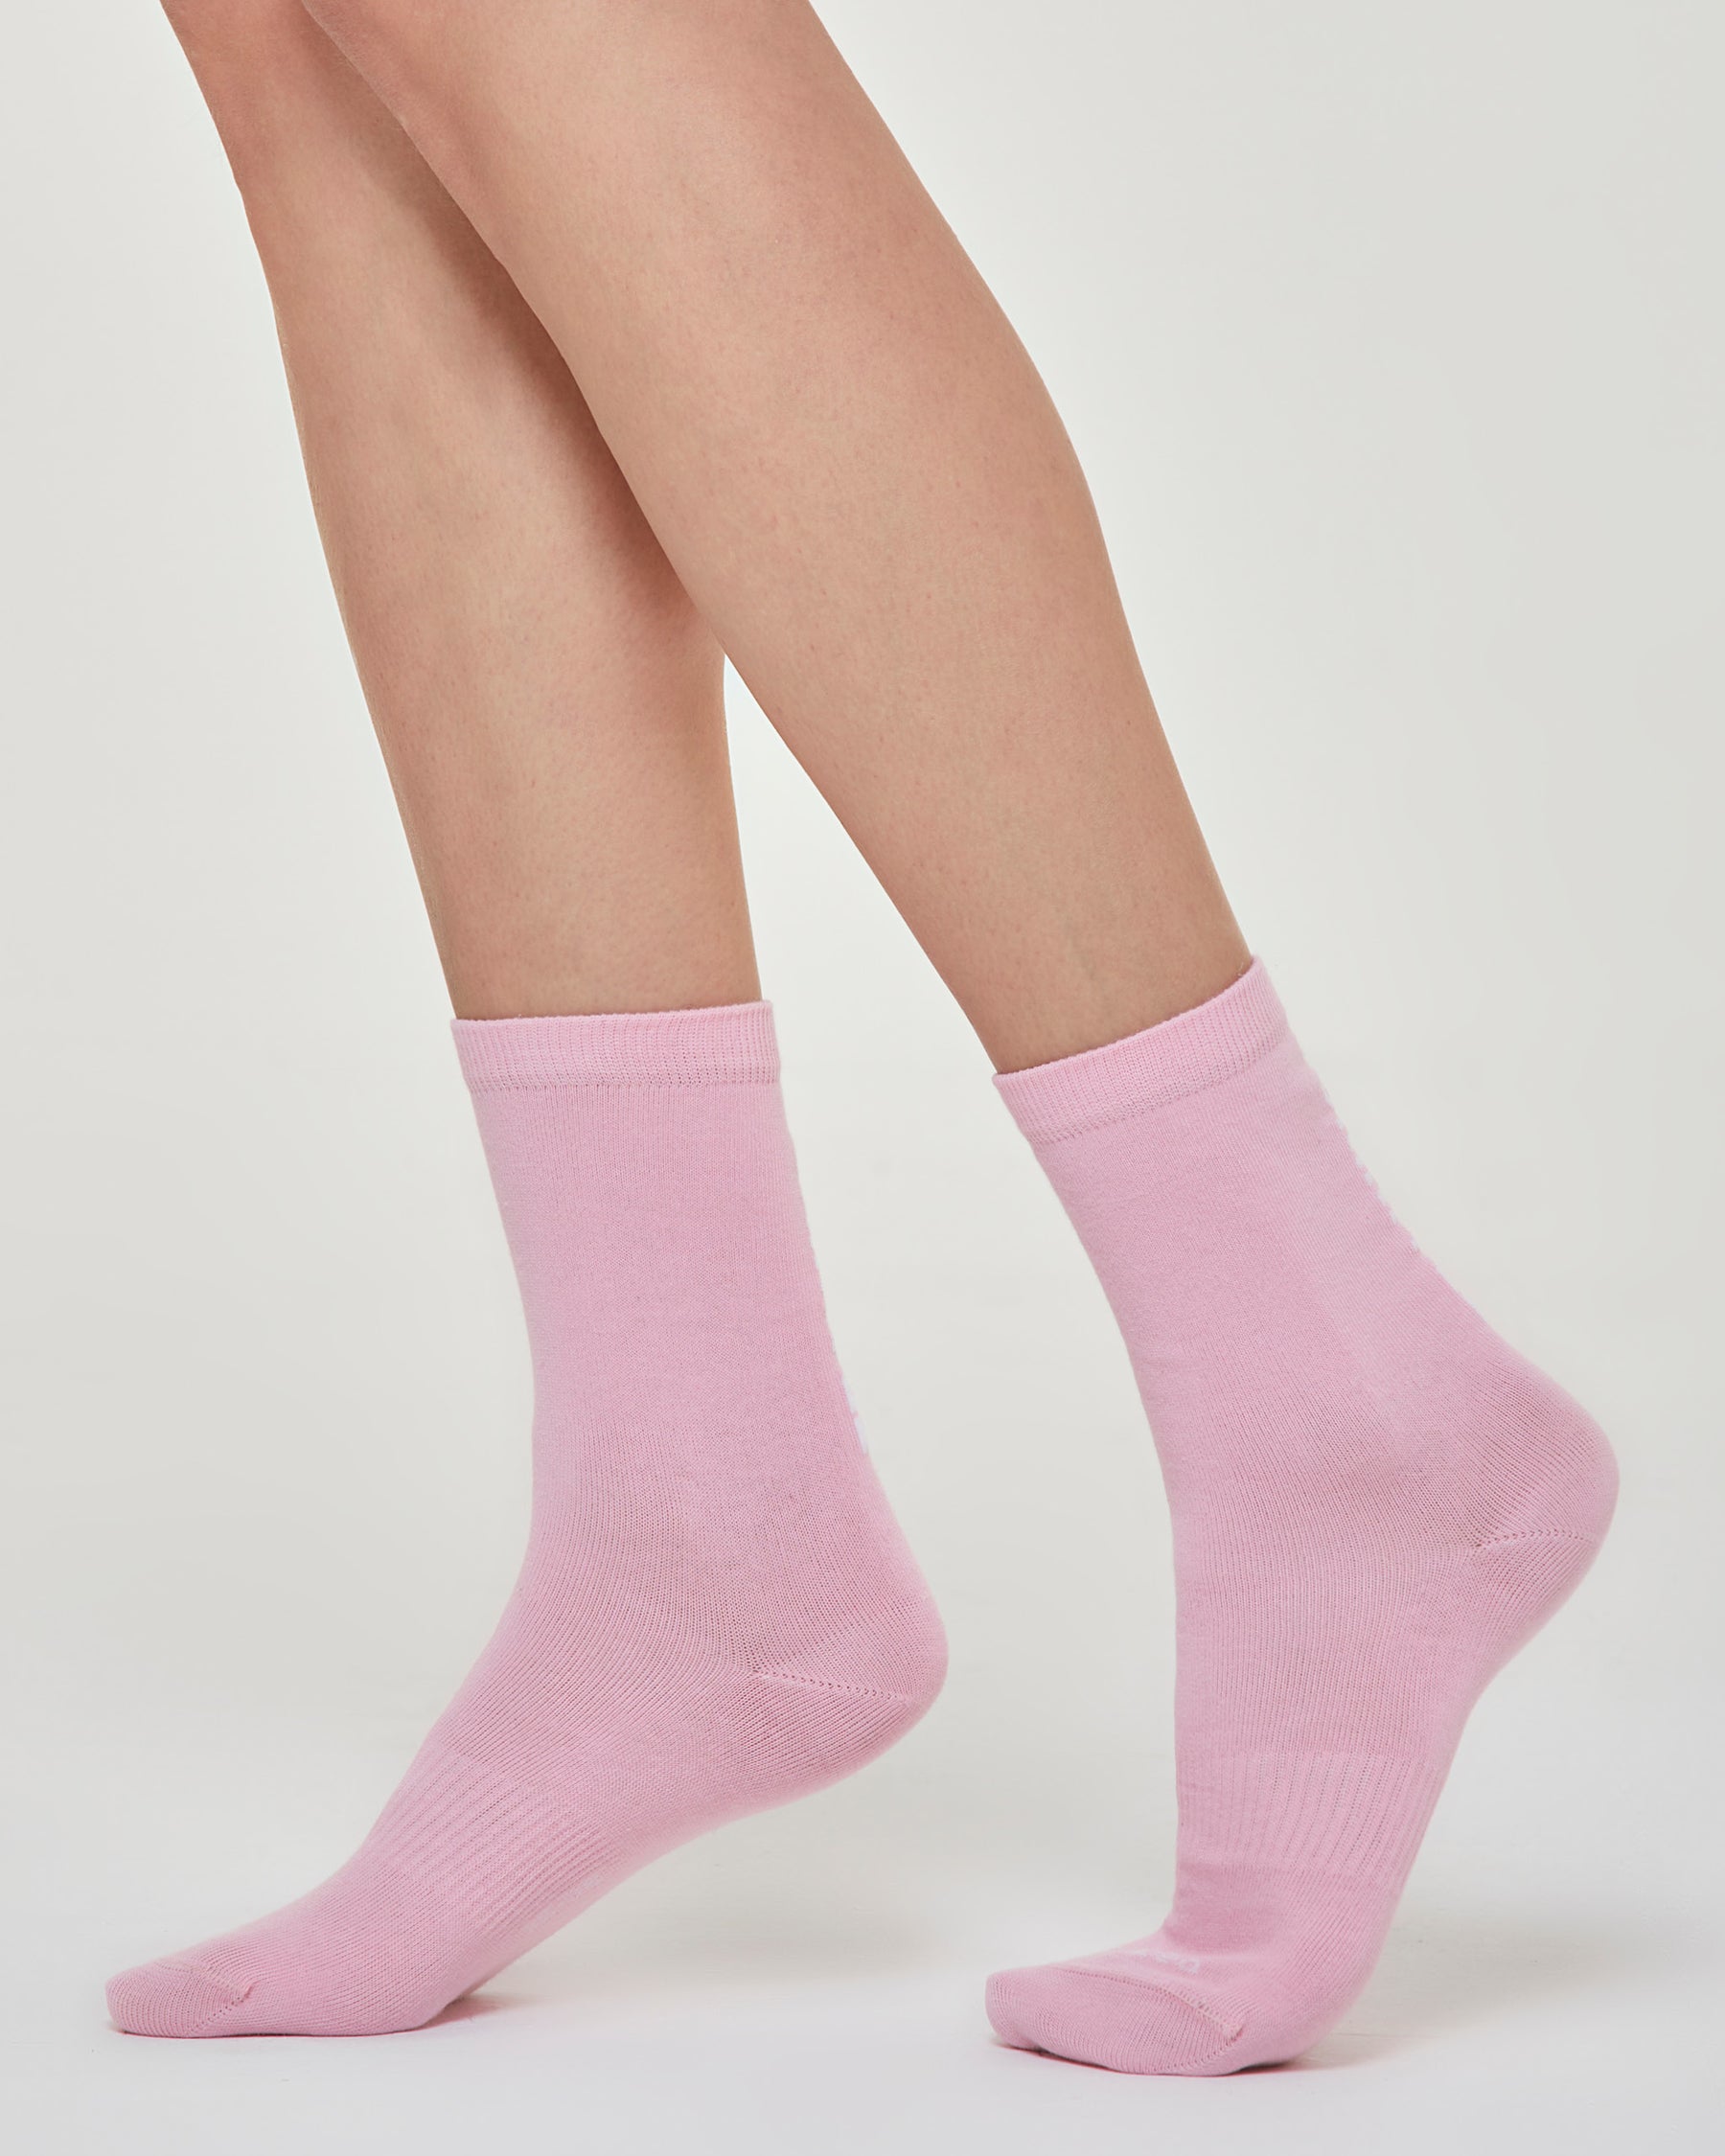 Short sport socks, Pink socks